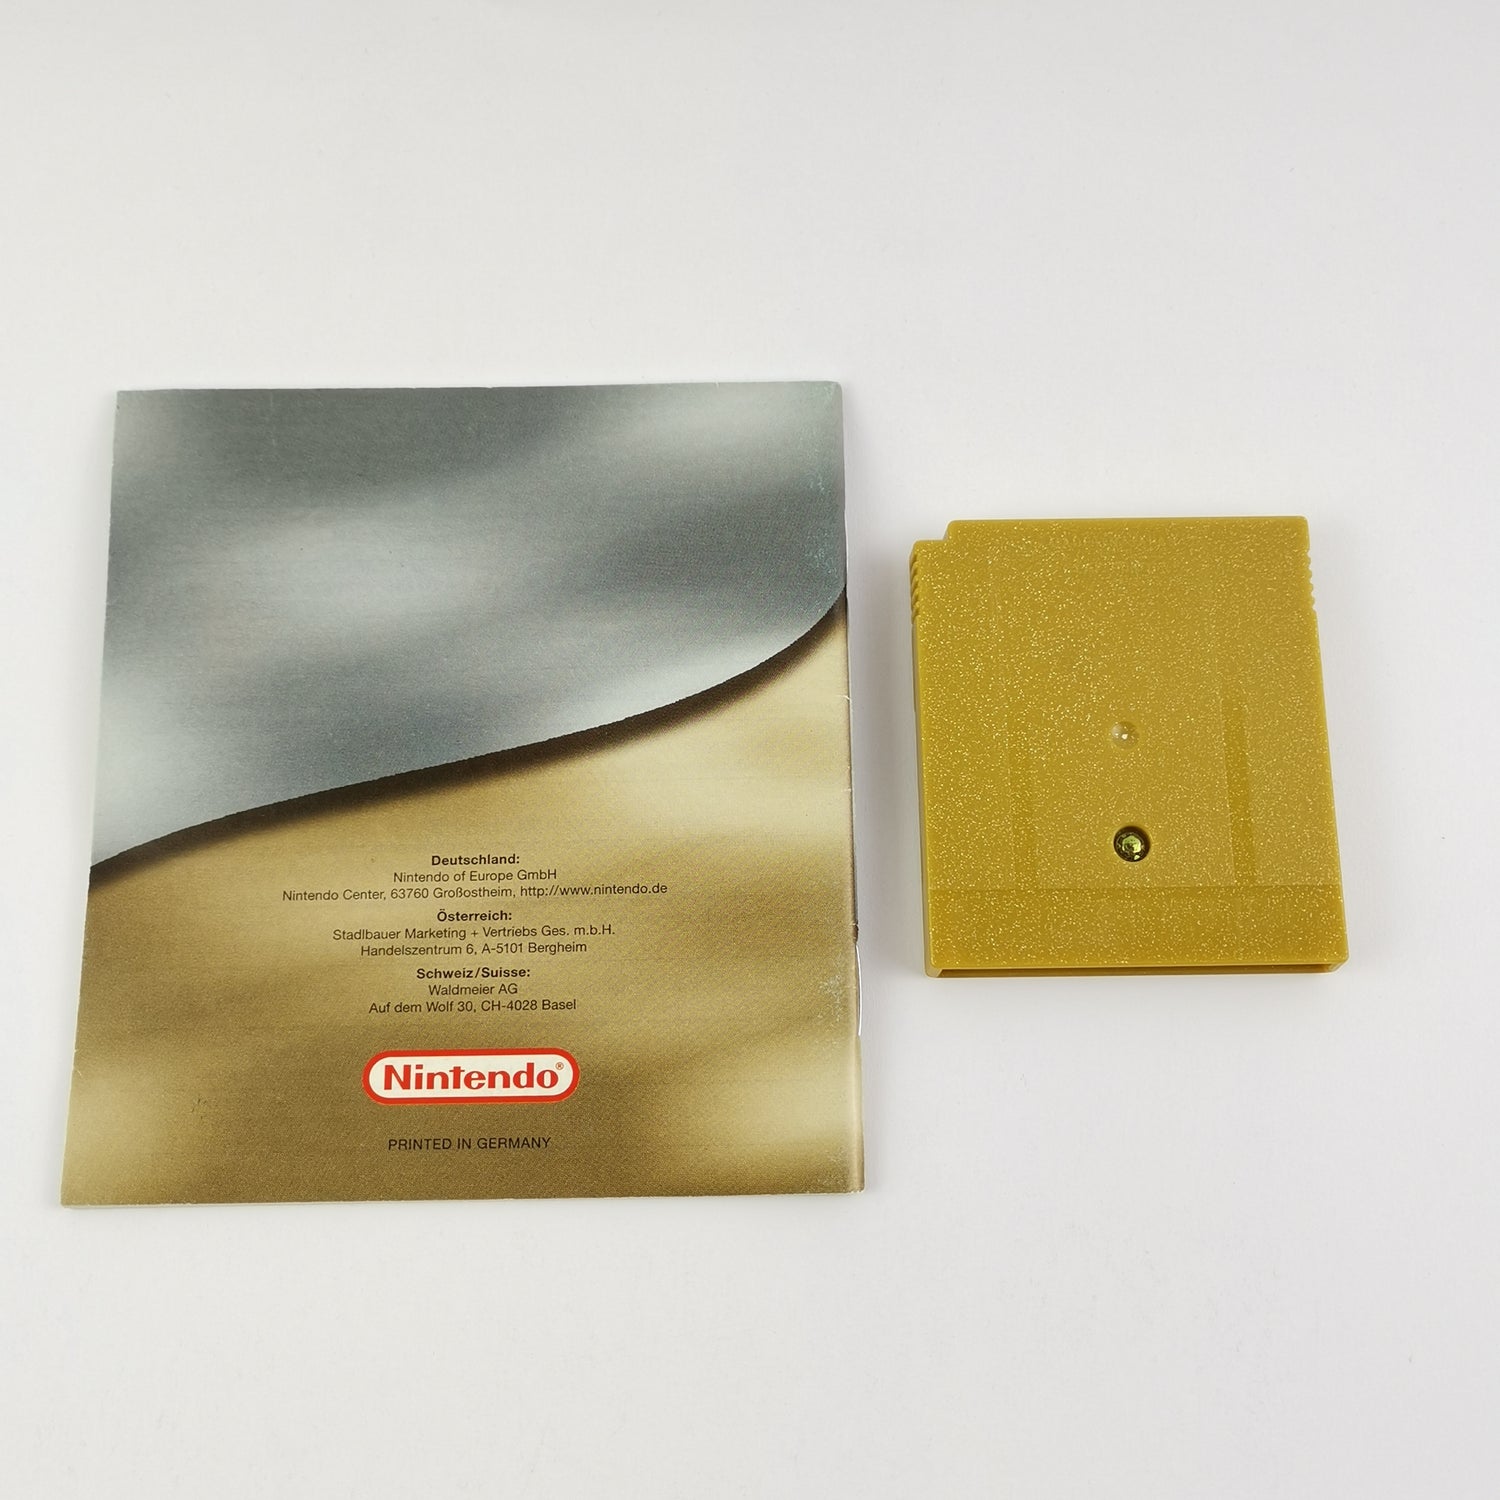 Nintendo Game Boy Color Game: Pokemon Golden Edition + Instructions - GBC Module